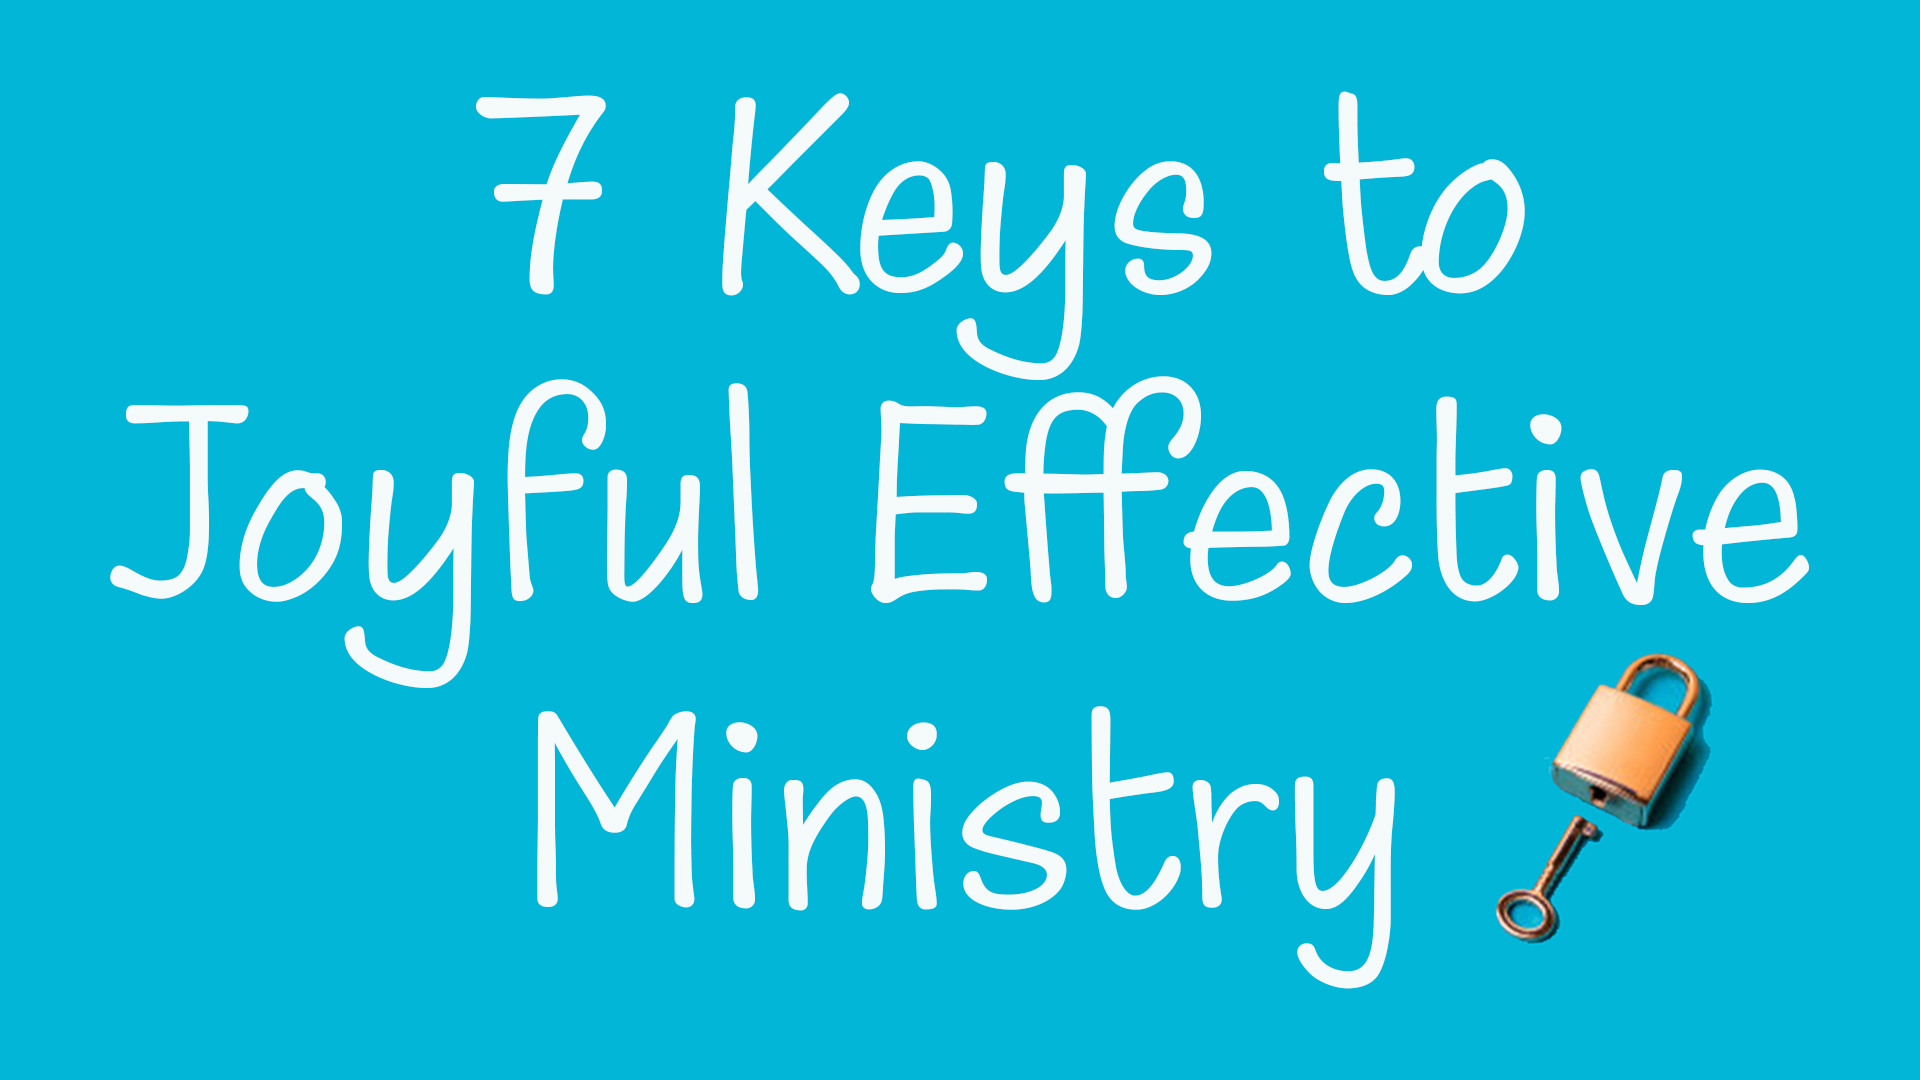 7 Keys to Joyful Effective Ministry